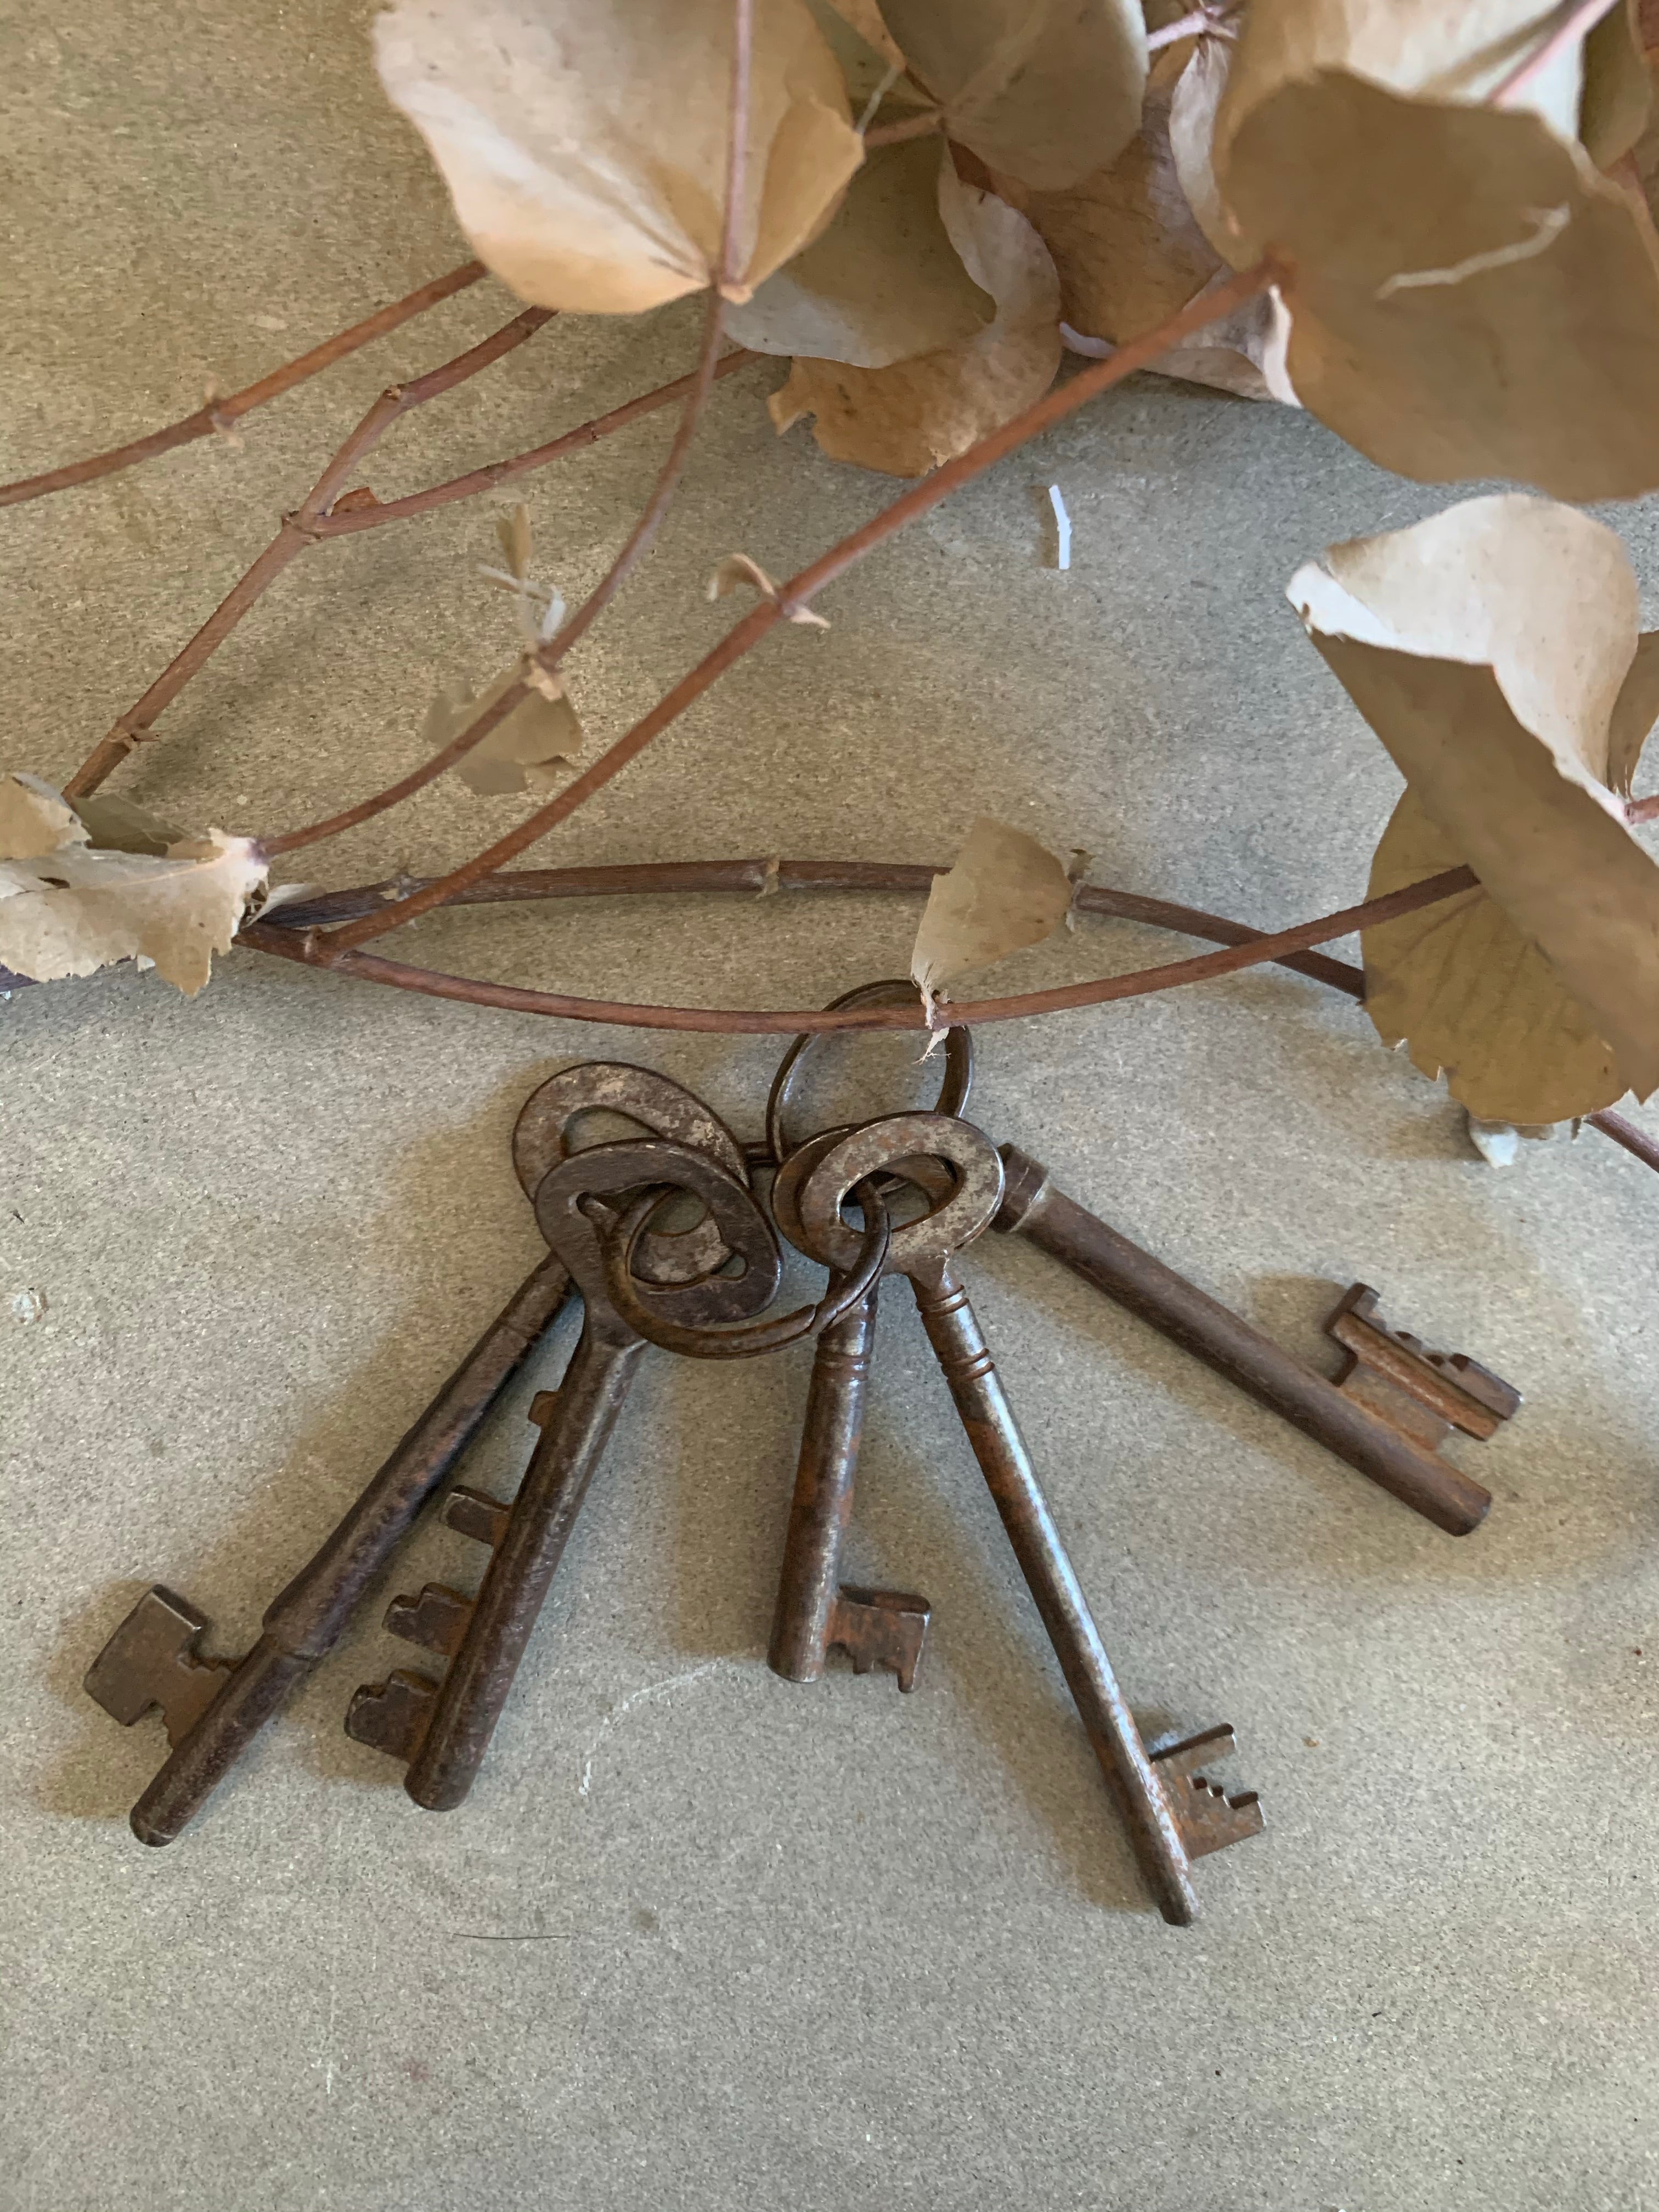 Vintage Keys Bundle